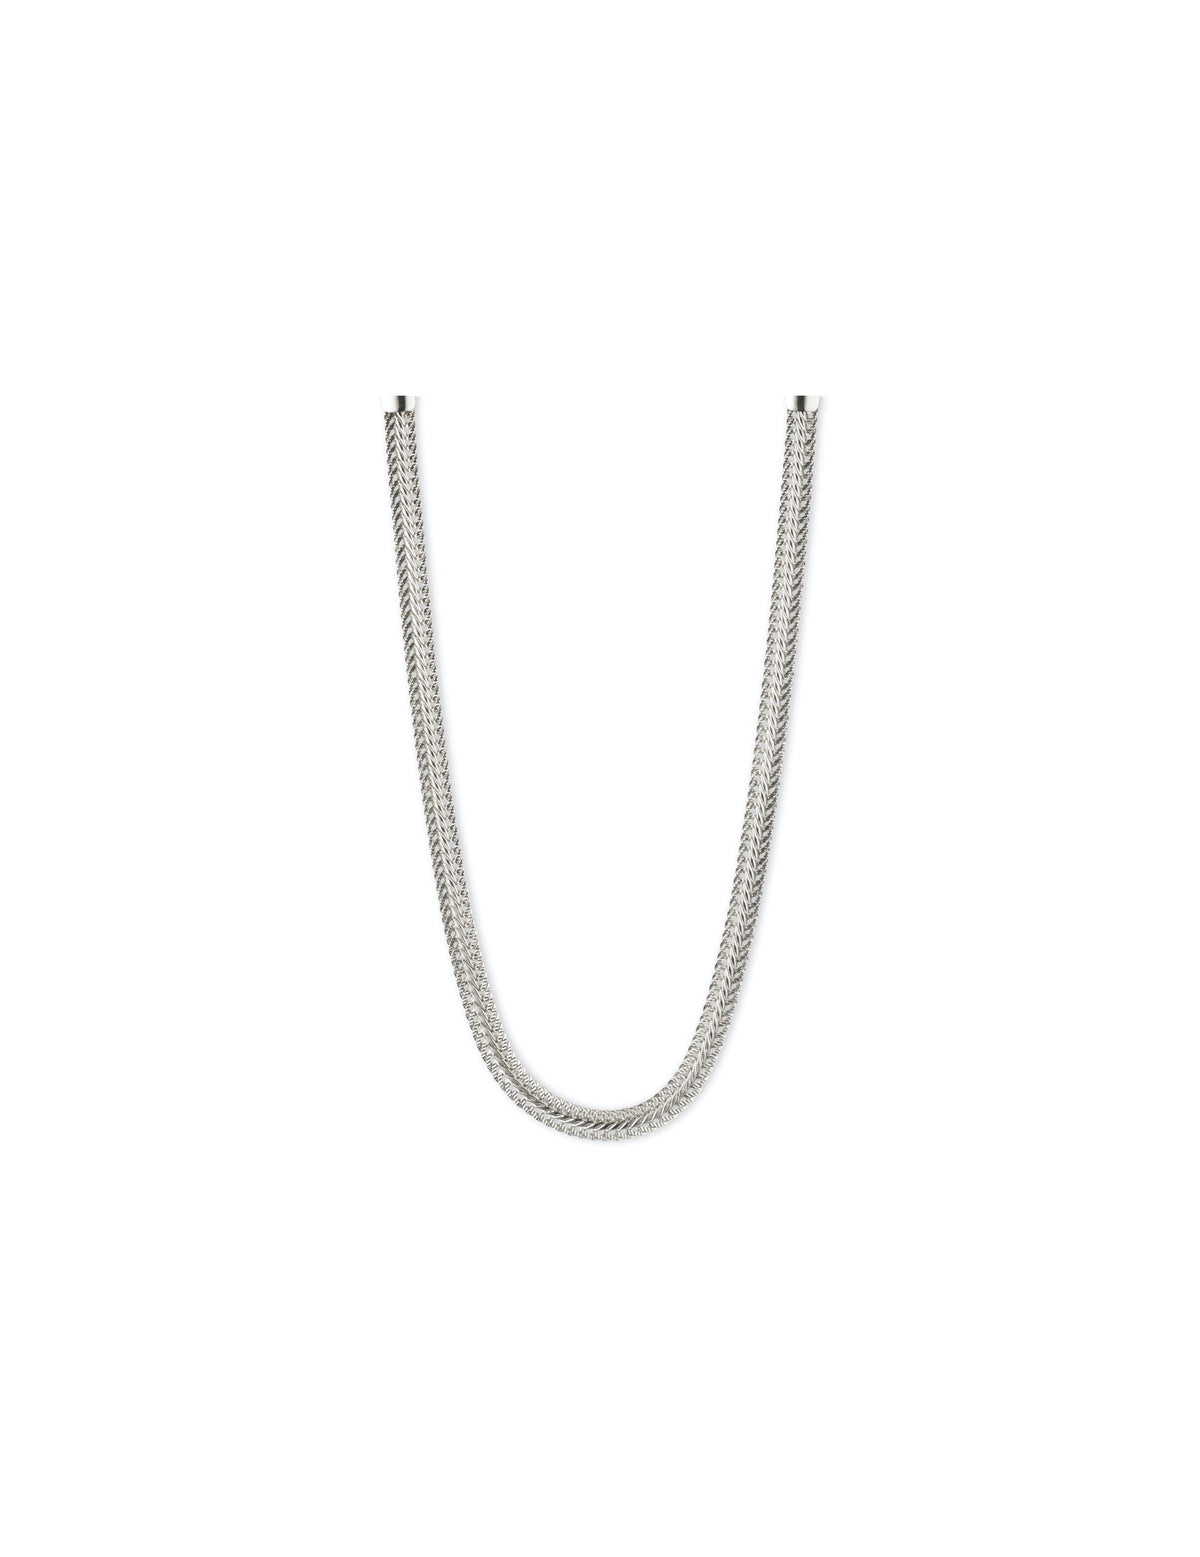 Anne Klein Silver-Tone Herringbone Chain Necklace